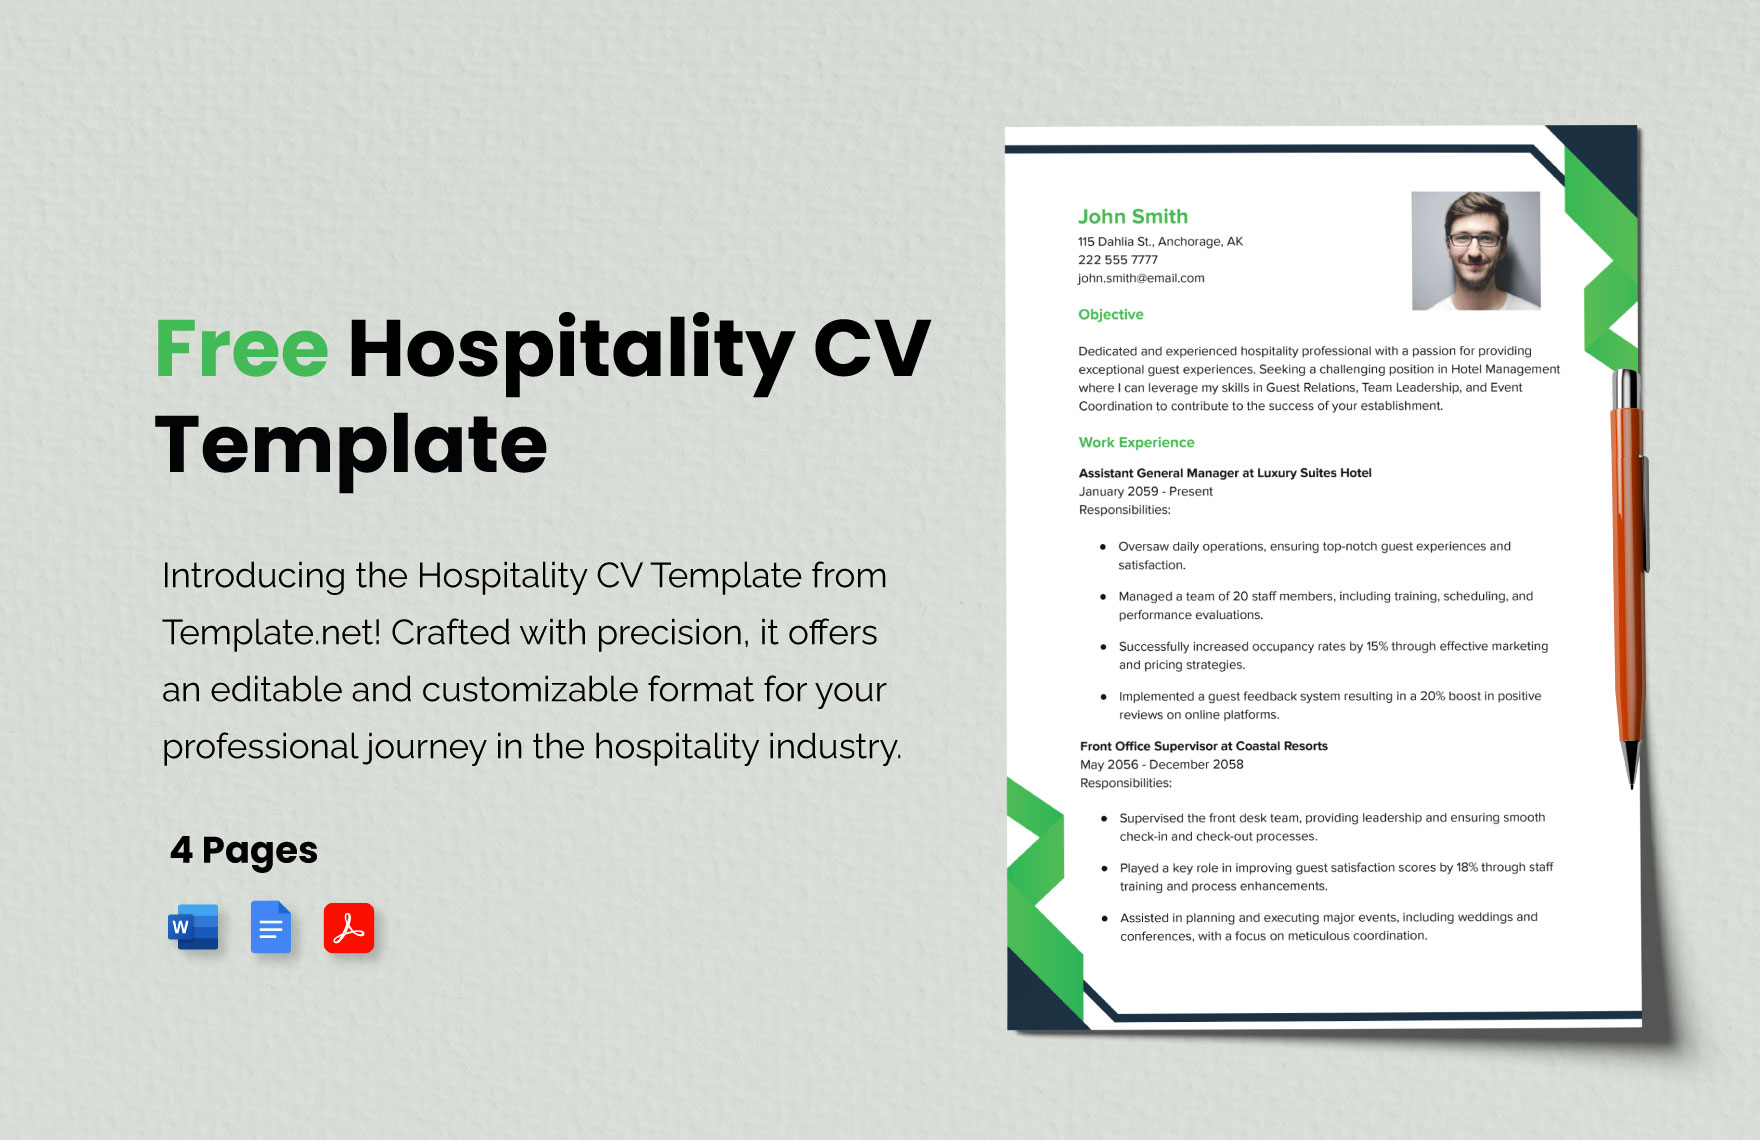 Free Hospitality CV Template